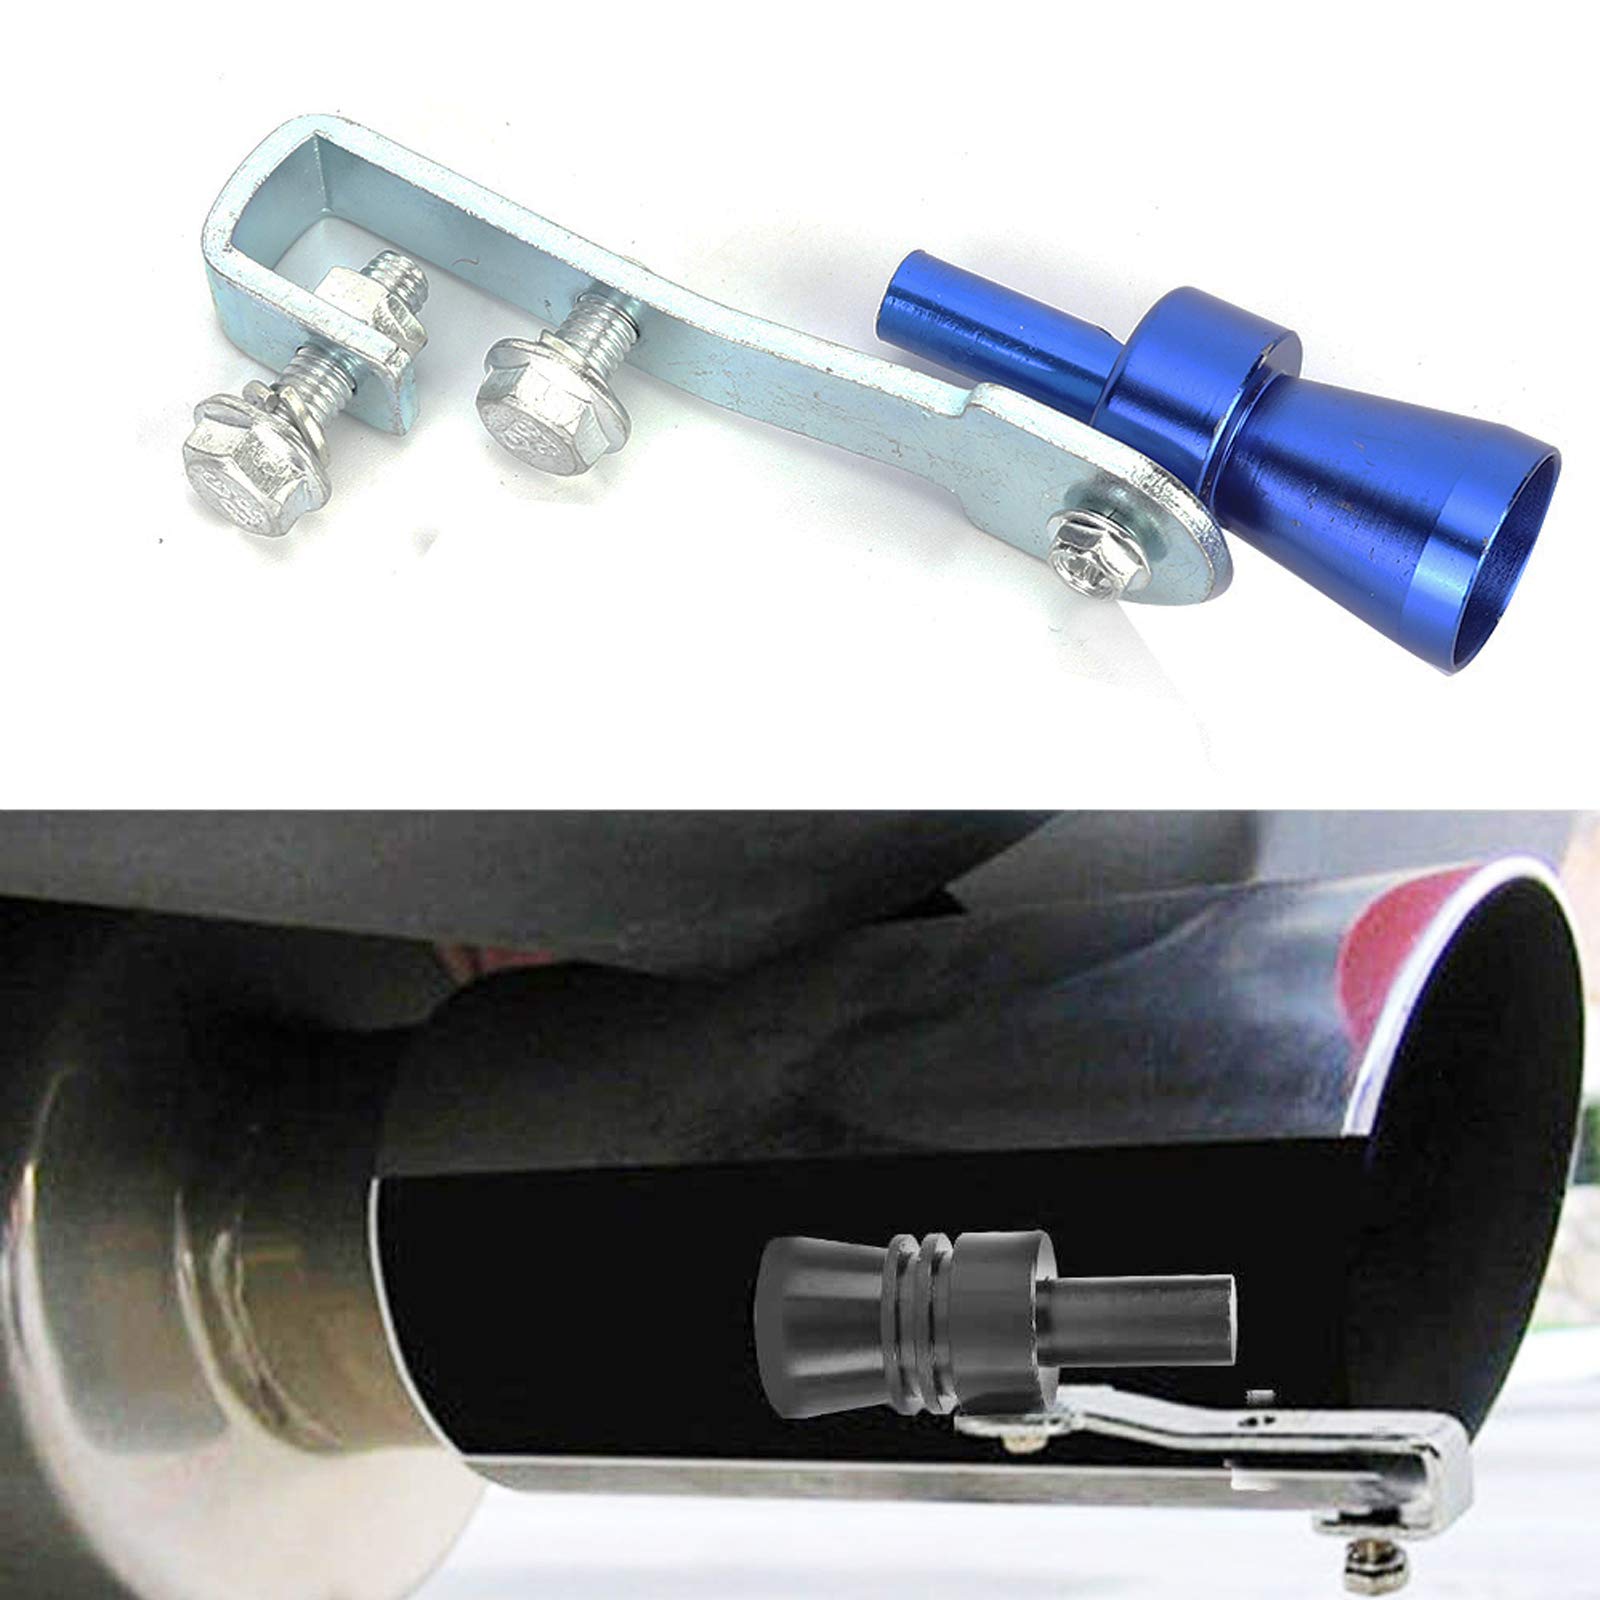 Turbo Sound Whistle, Aluminiumlegierung Auto Turbo Sound Whistle Tail Throat Schalldämpfer Auspuffpfeife Blau((TC-S code)) von Headerbs